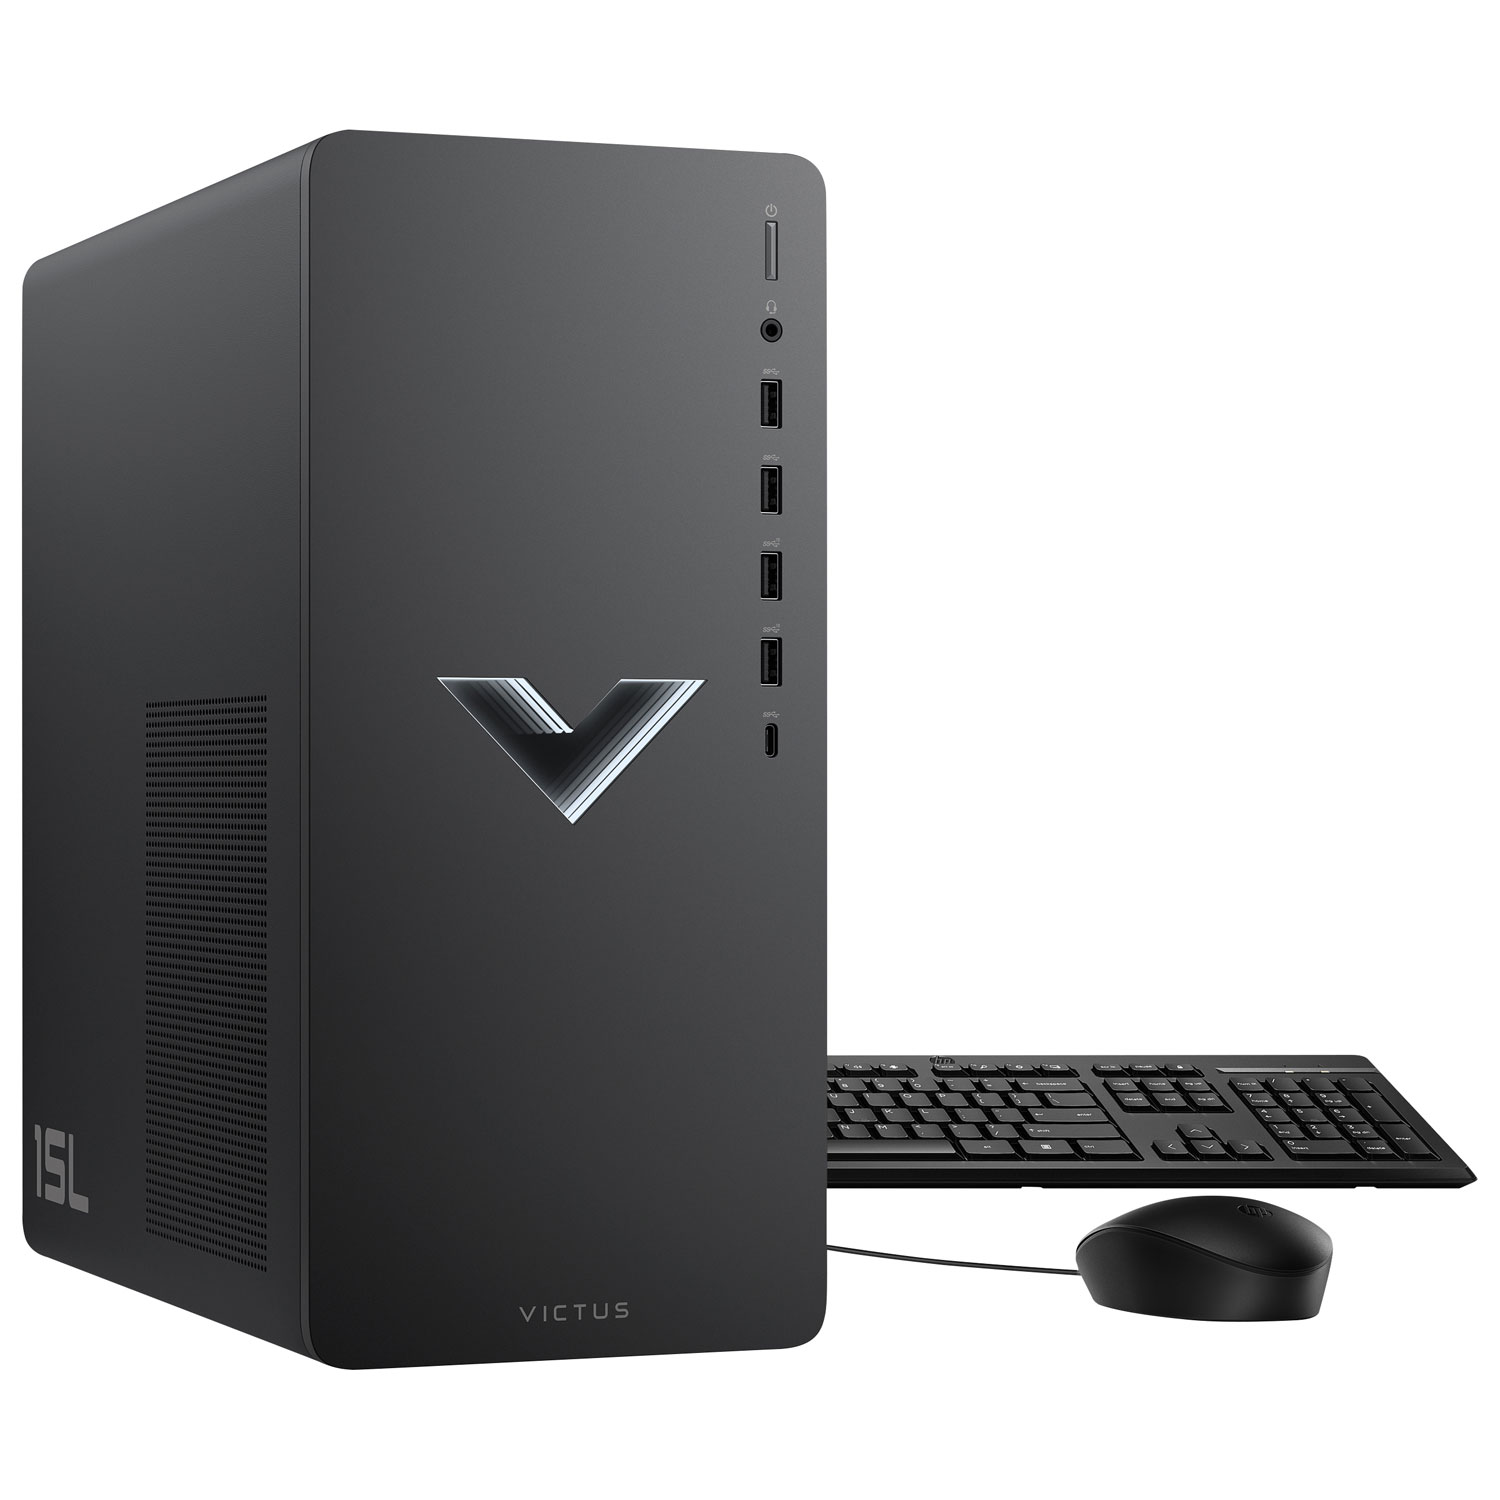 HP Victus Gaming PC (AMD Ryzen 7 5700G/512GB SSD/16GB RAM/GeForce RTX 3060) - Only at Best Buy